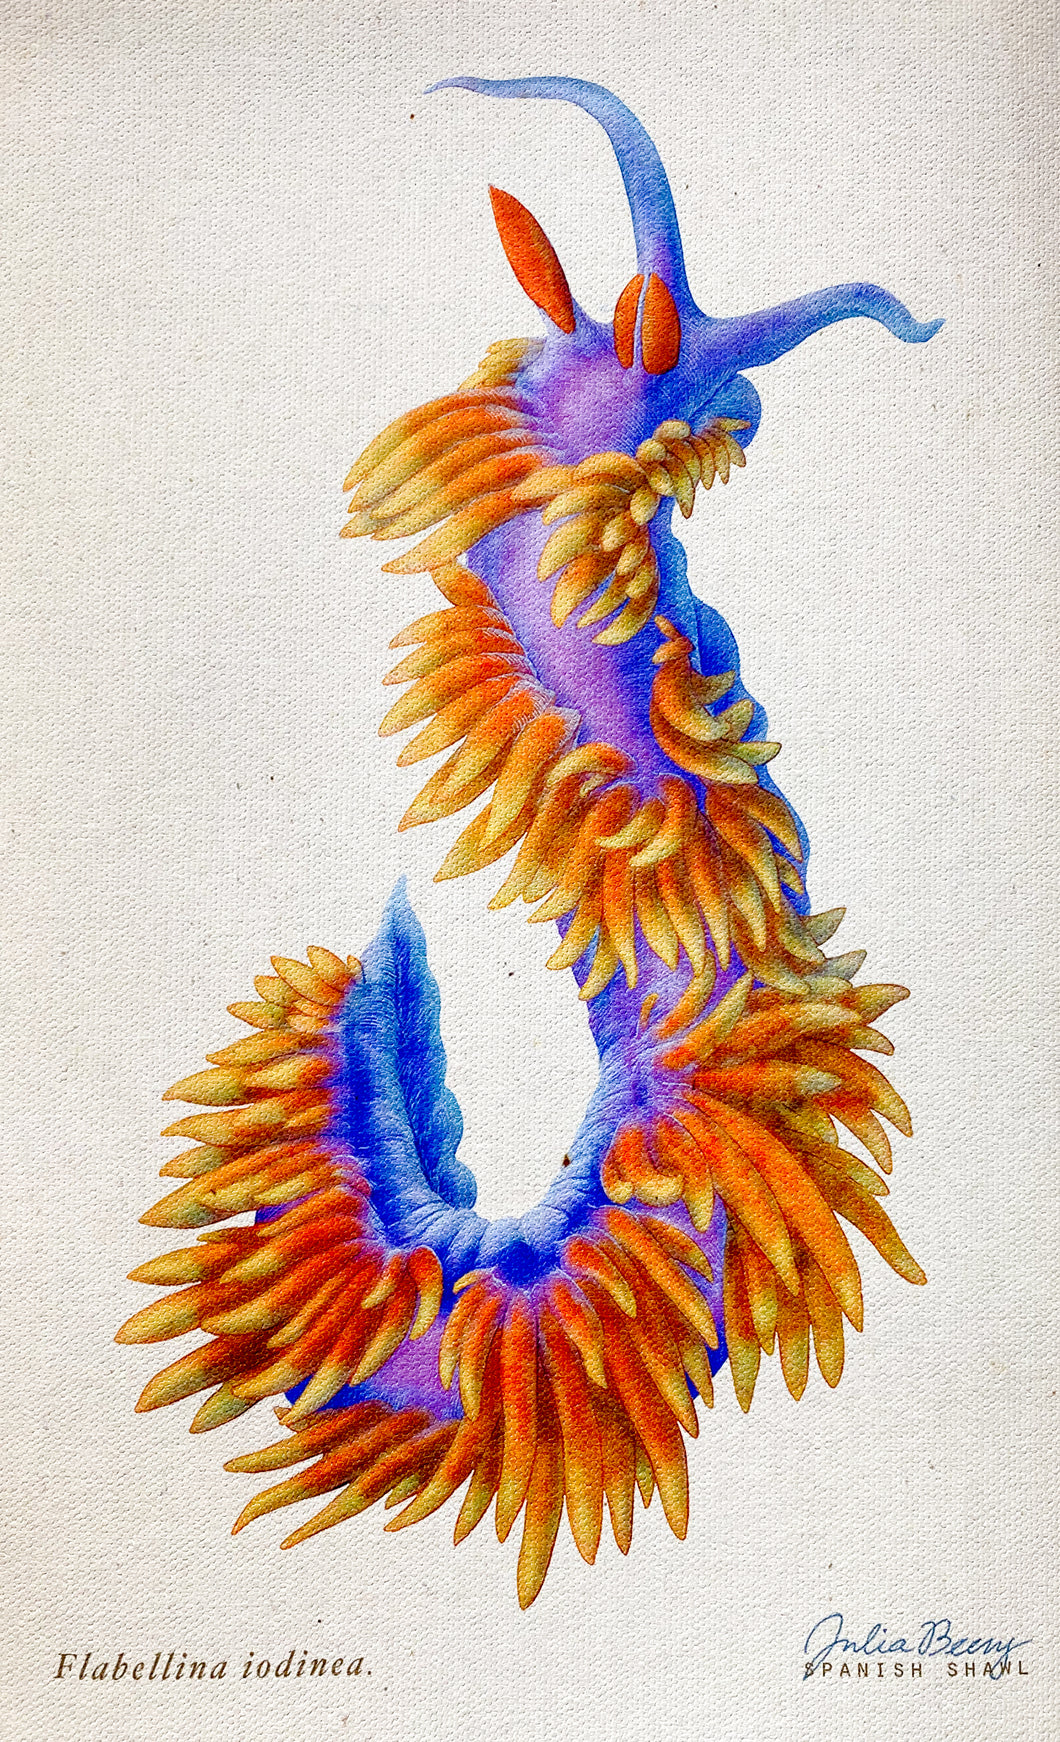 Spanish Shawl (Flabellinopsis iodinea) Giclée Print